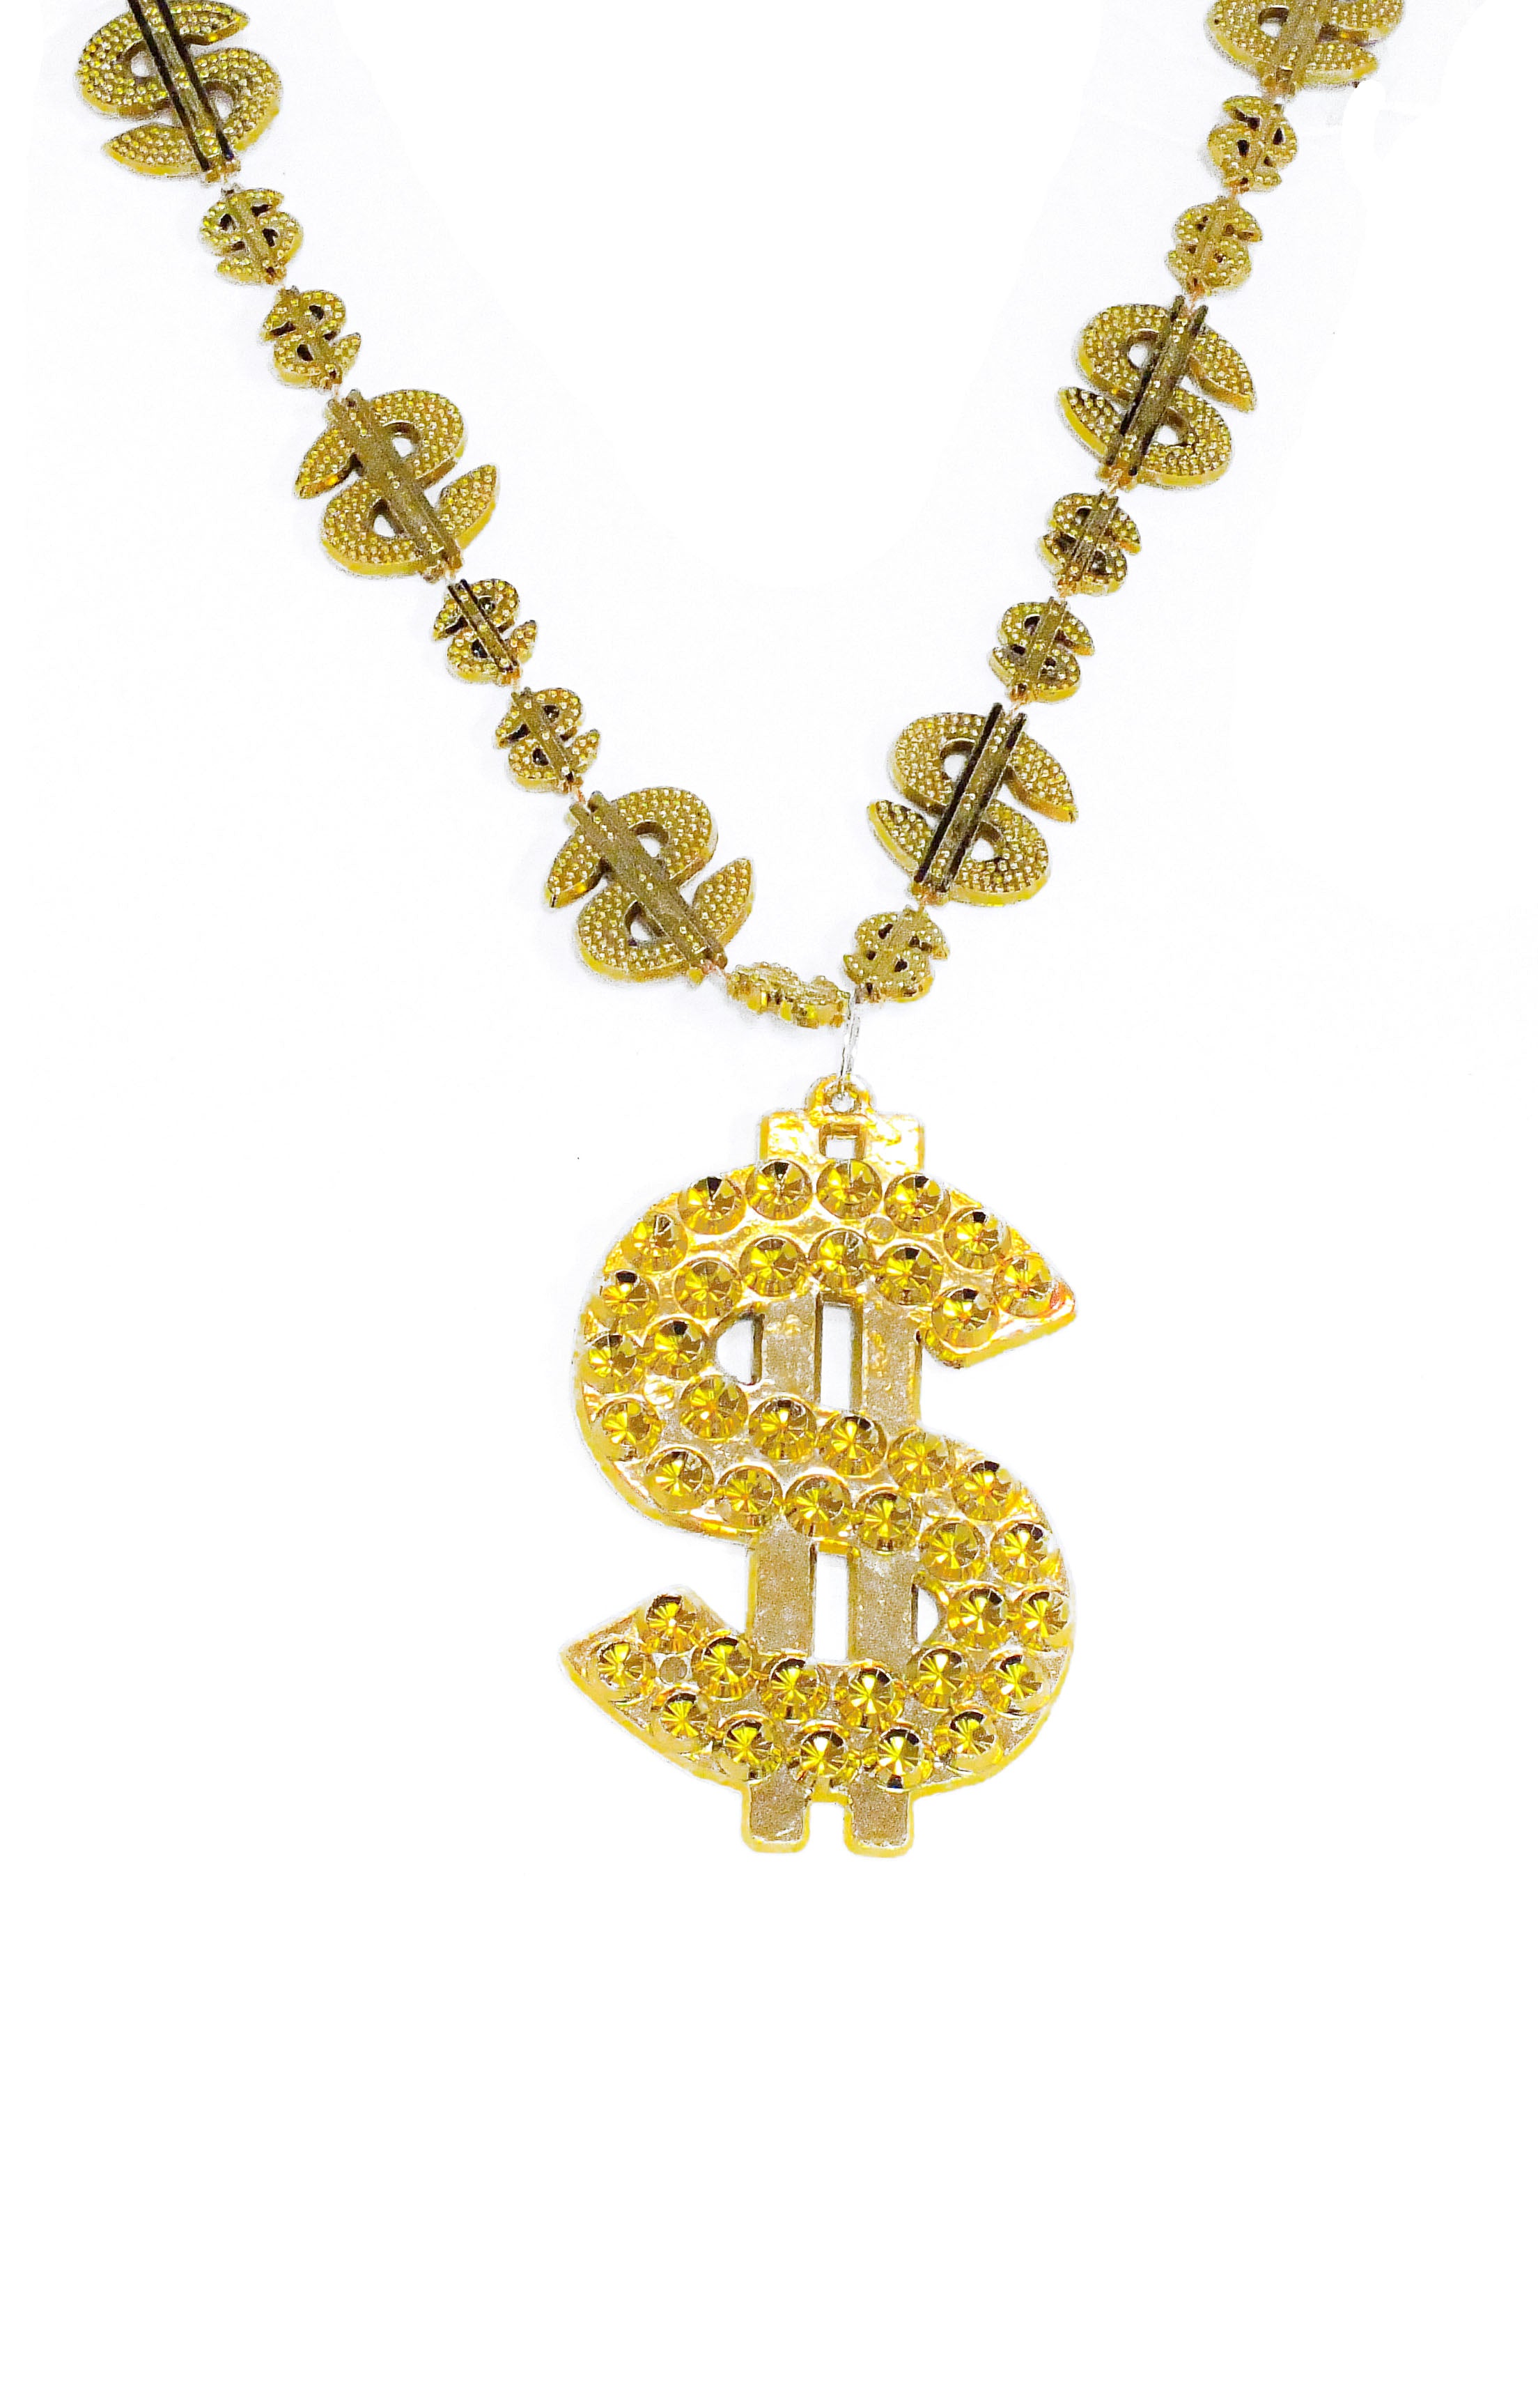 36" Gold Dollar Sign bead